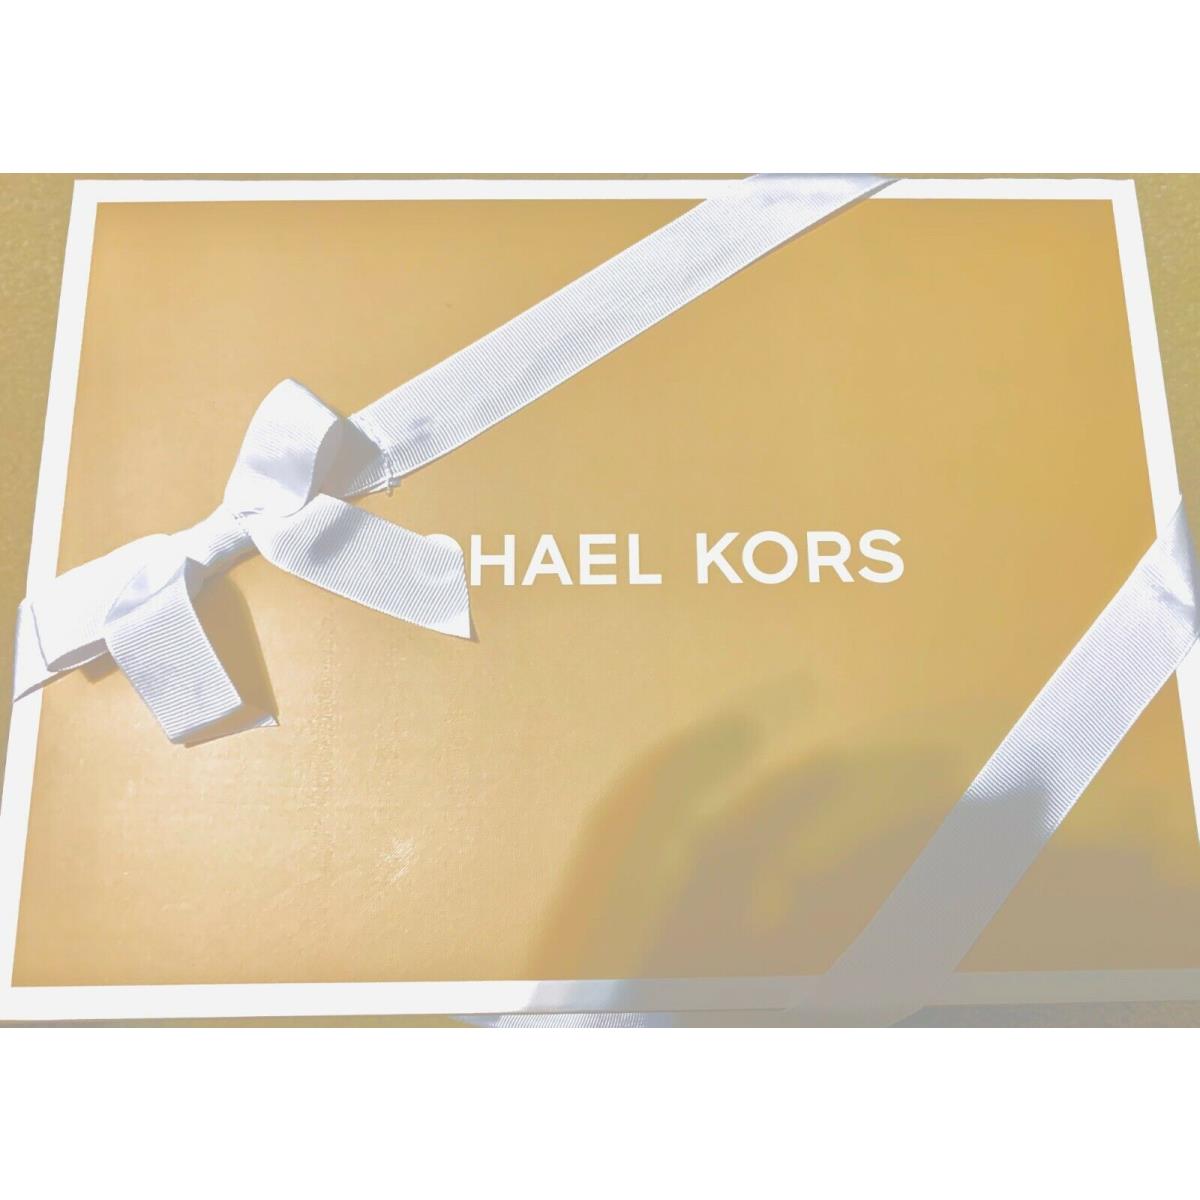 Michael Kors wallet  - Blue